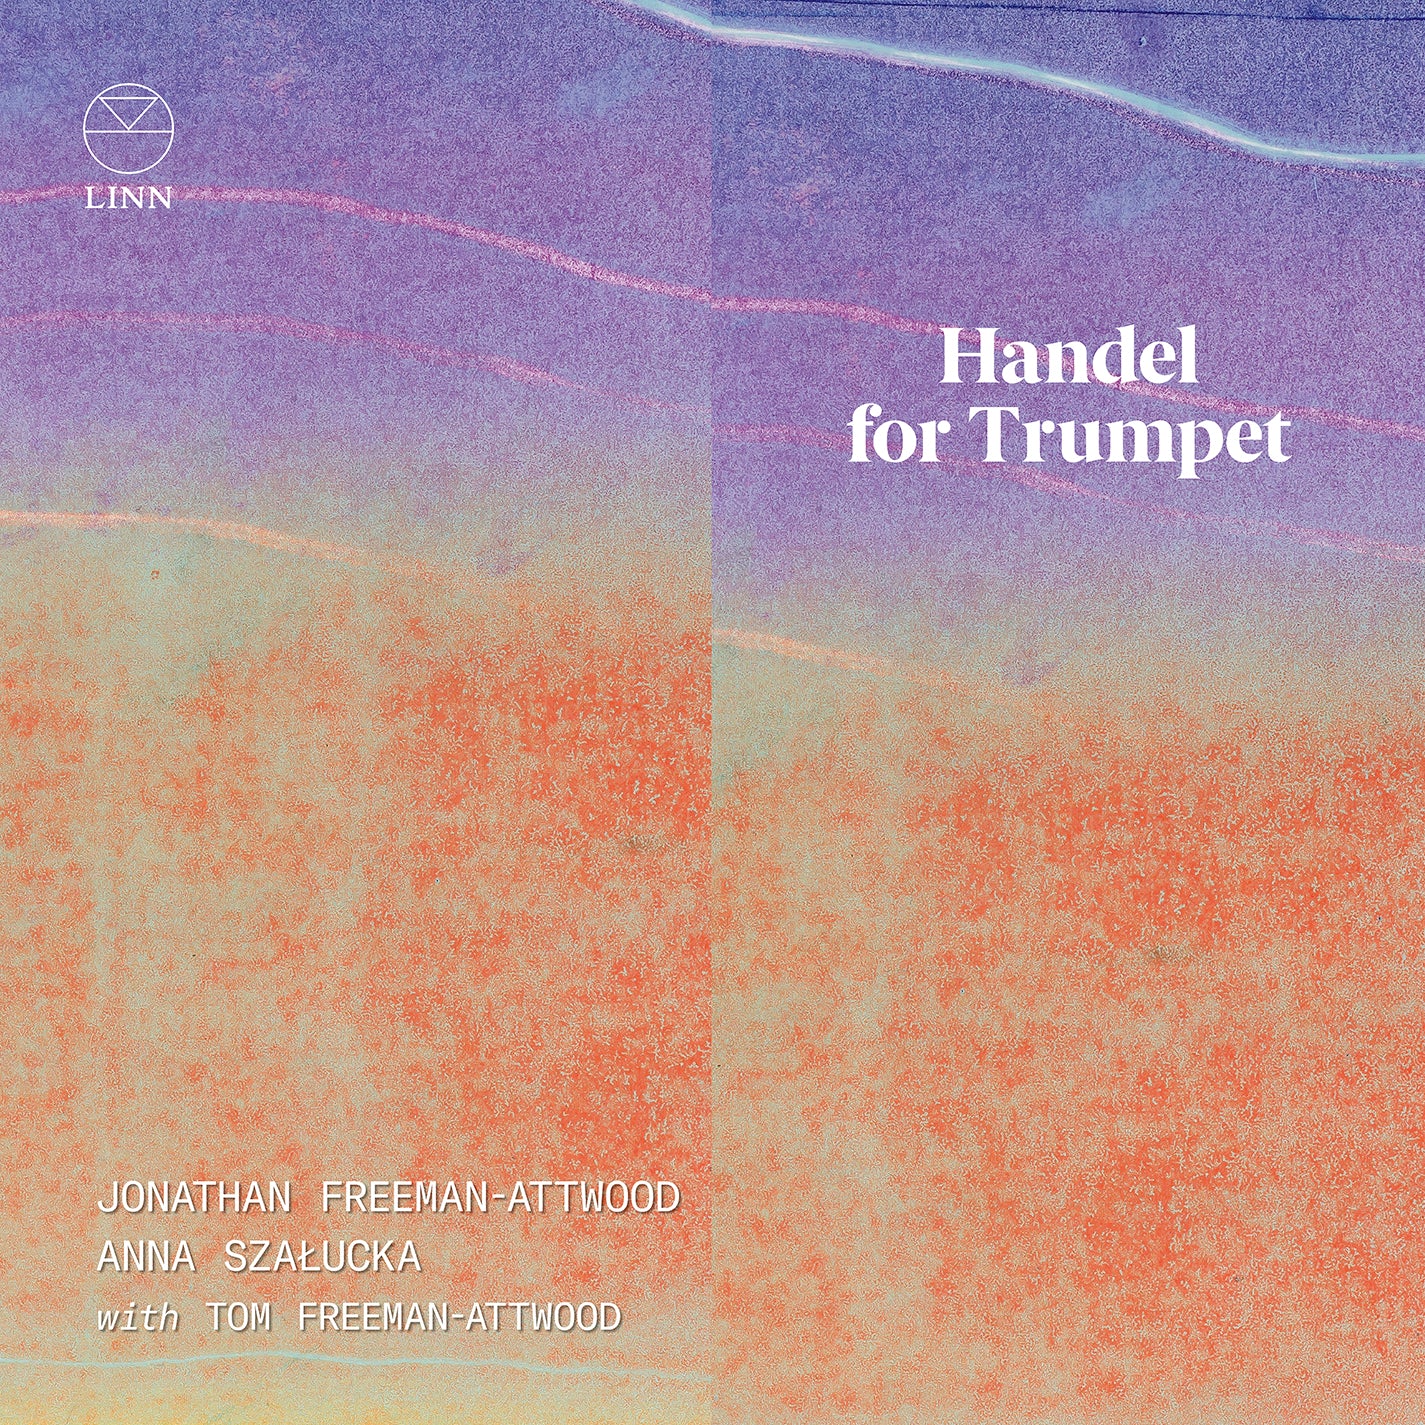 Handel for Trumpet / Freeman-Attwood, Szałucka